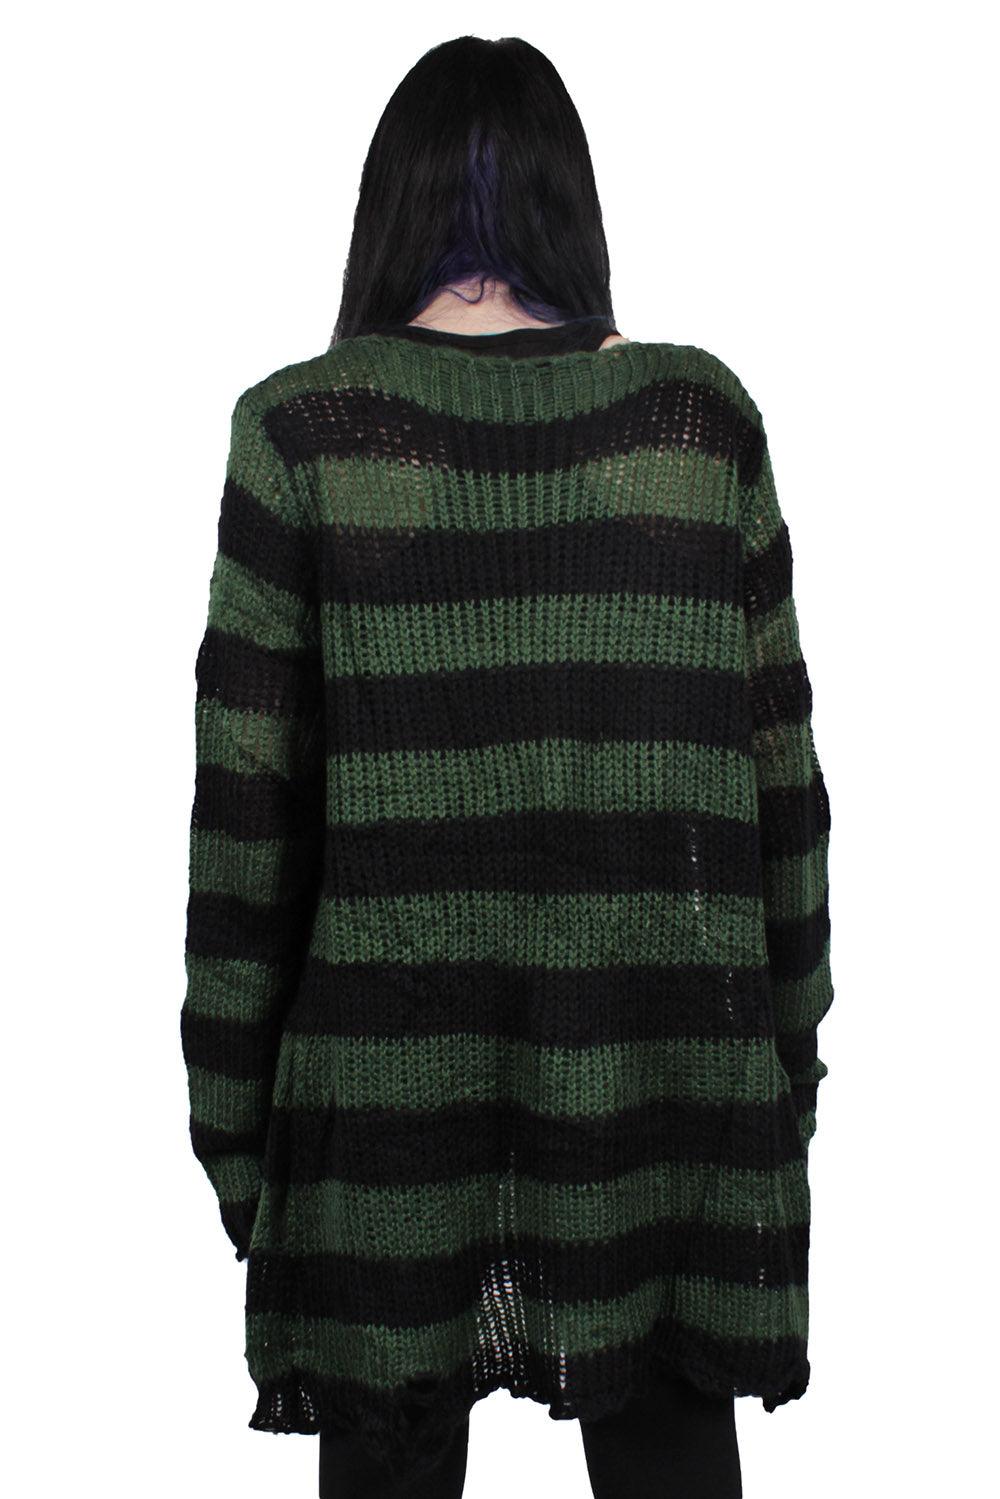 Catalyst Dark Forest Green/Black Striped Distressed Sweater - VampireFreaks